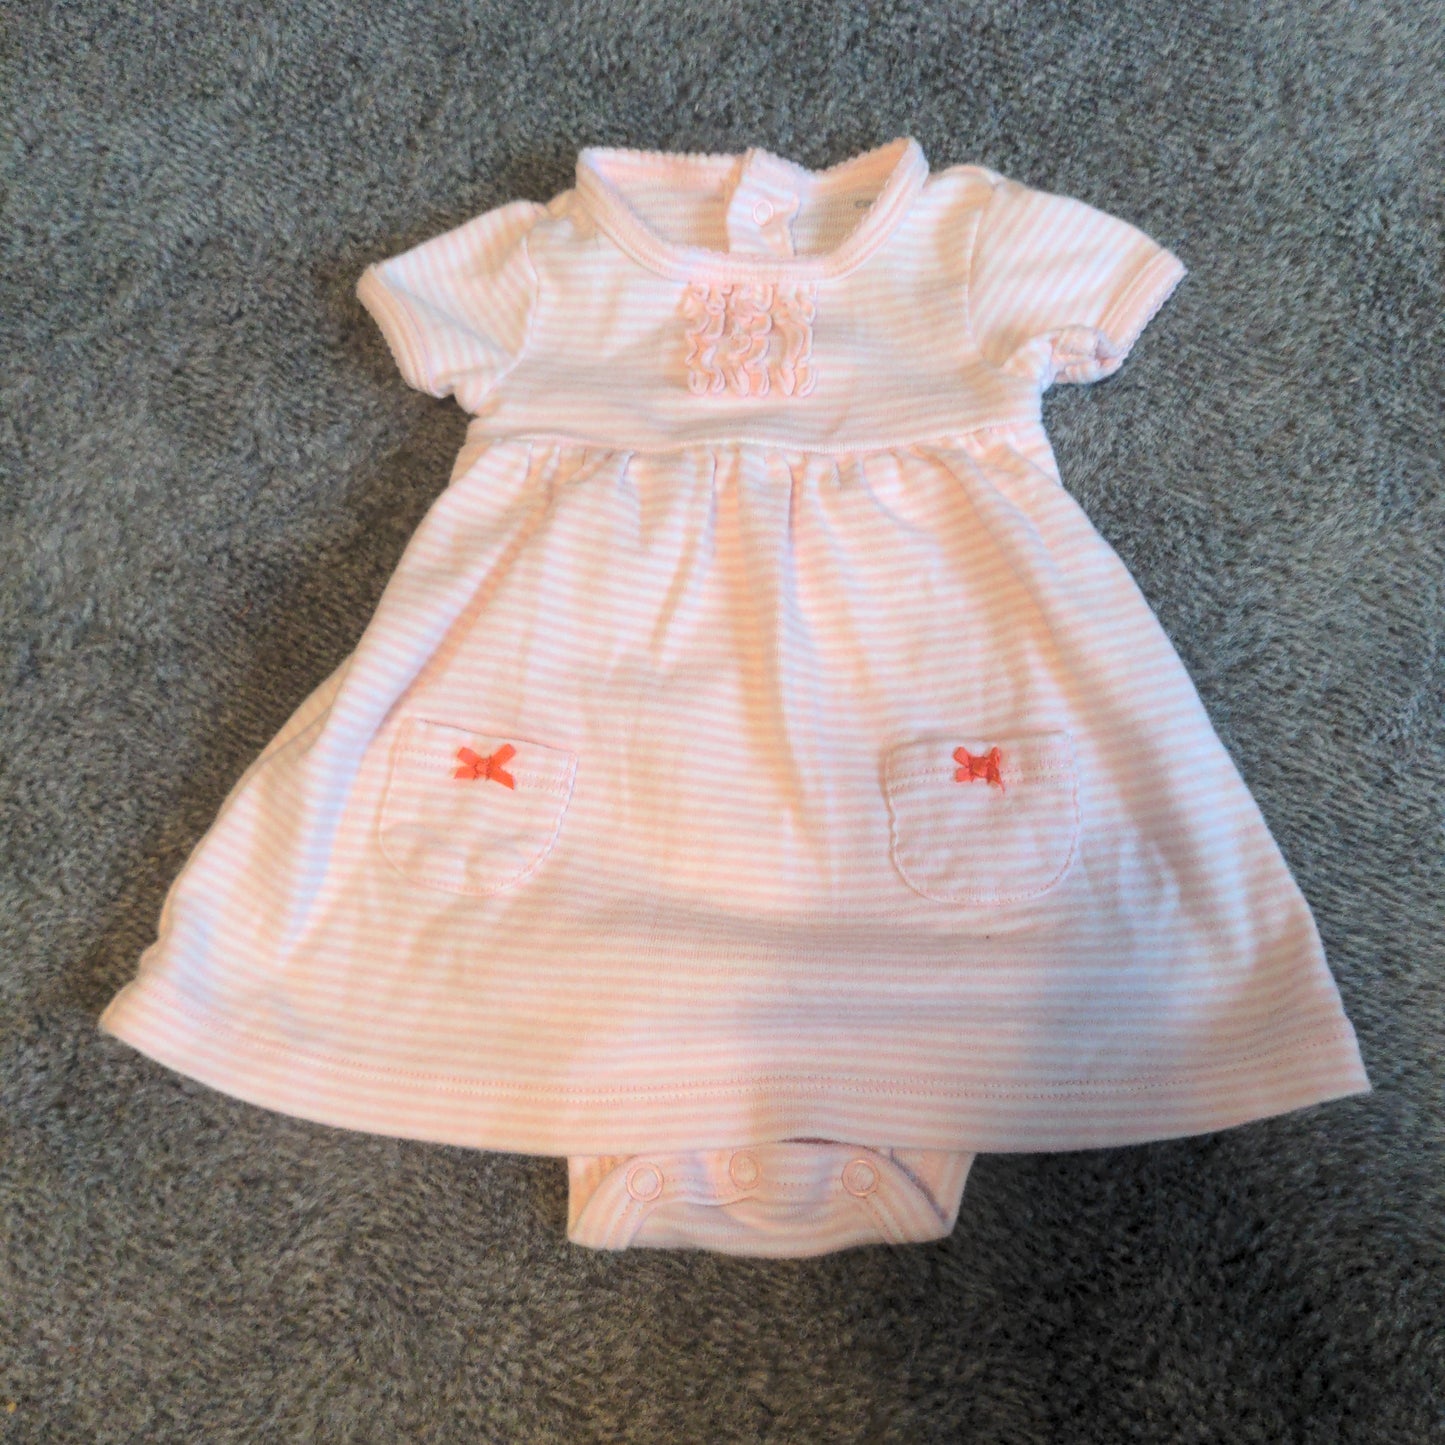 Carter's pink/white striped dress size 3mo